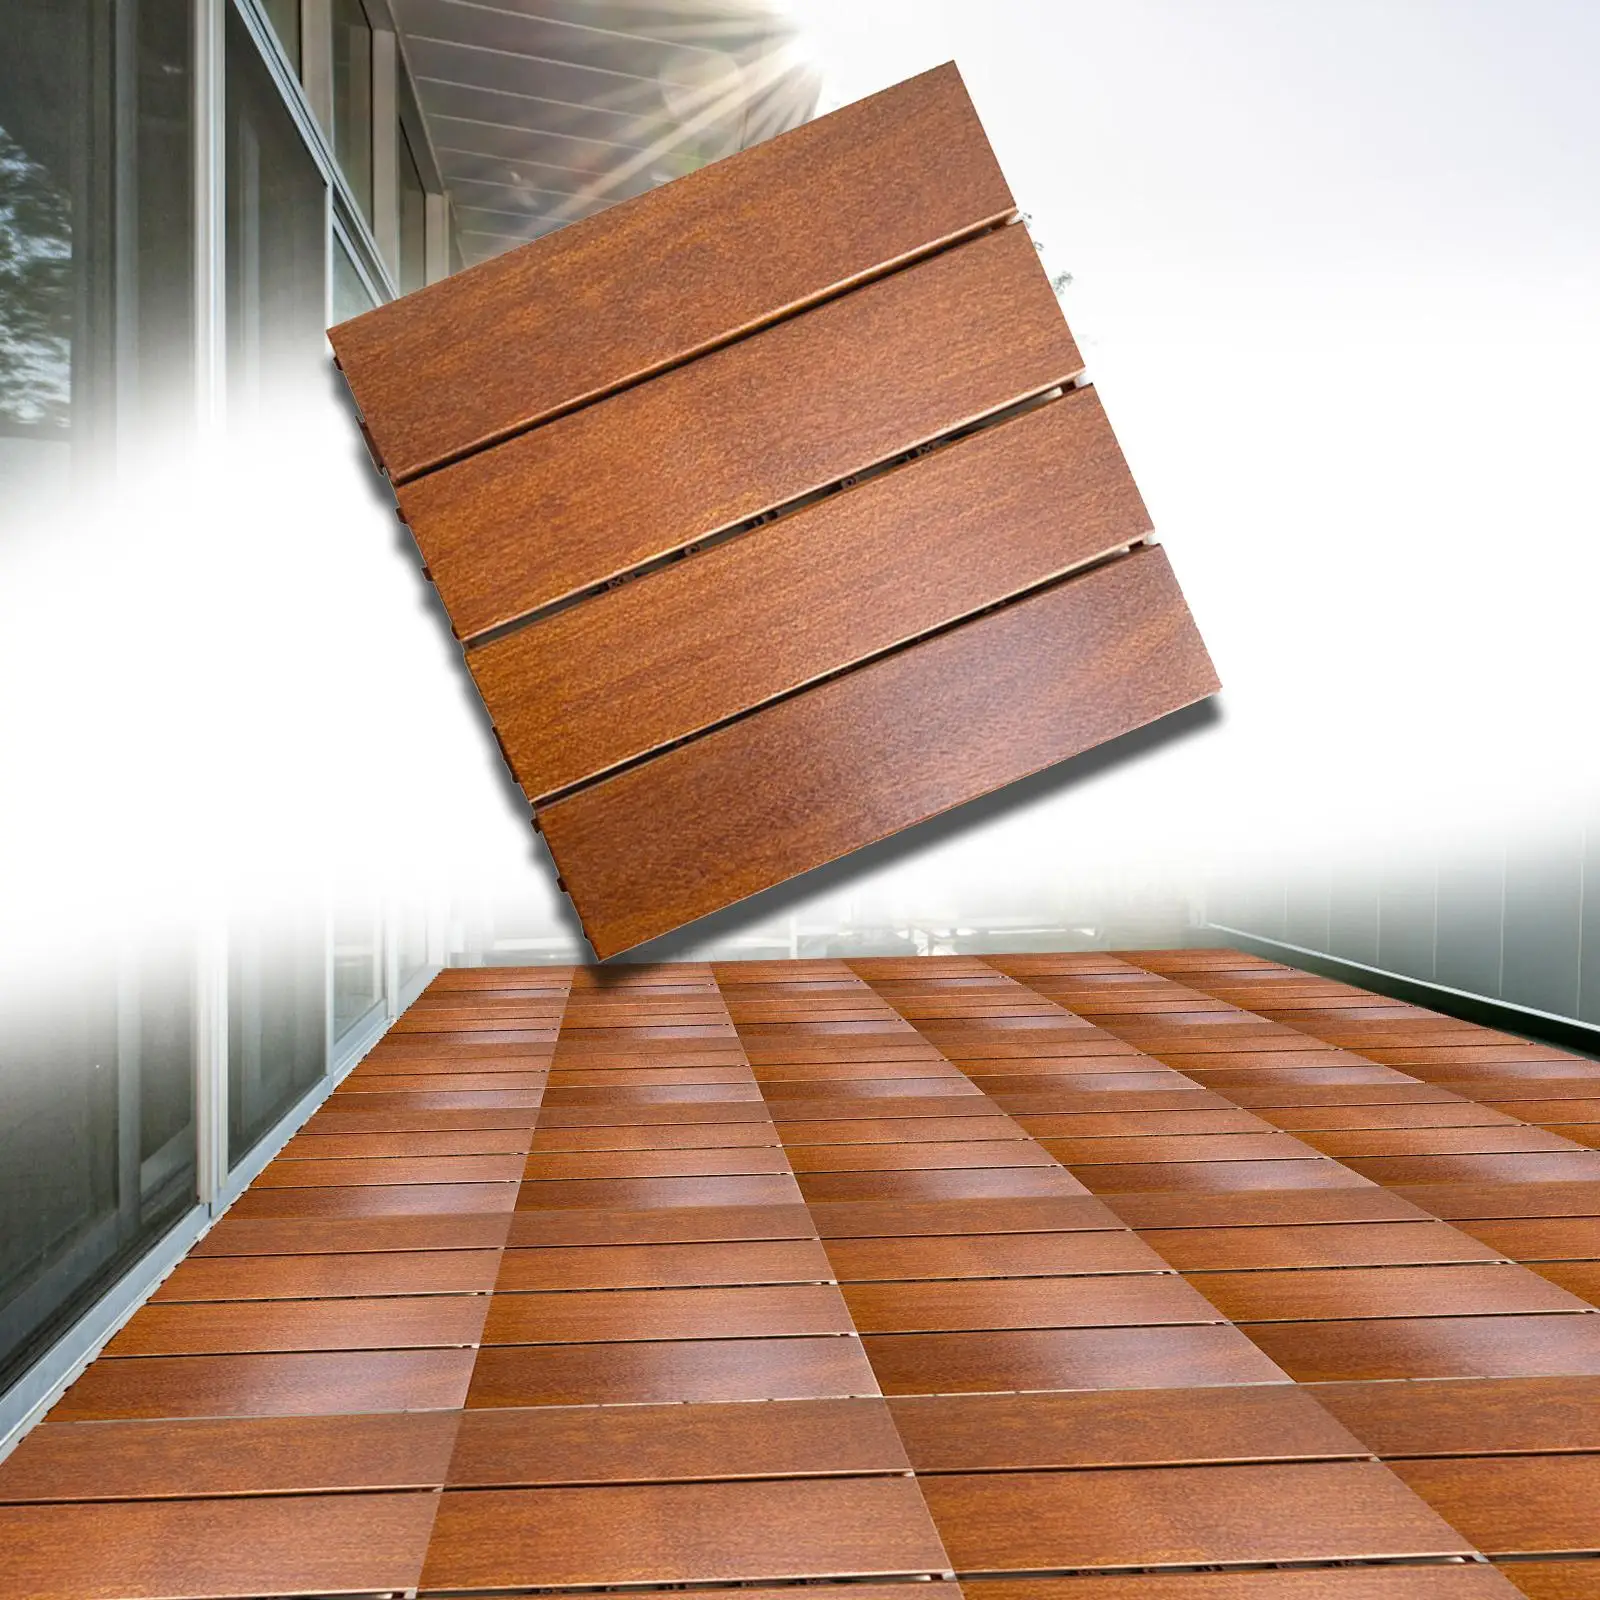 Outdoor Flooring Interlocking Deck Tiles for Home Backyard Decking Garden